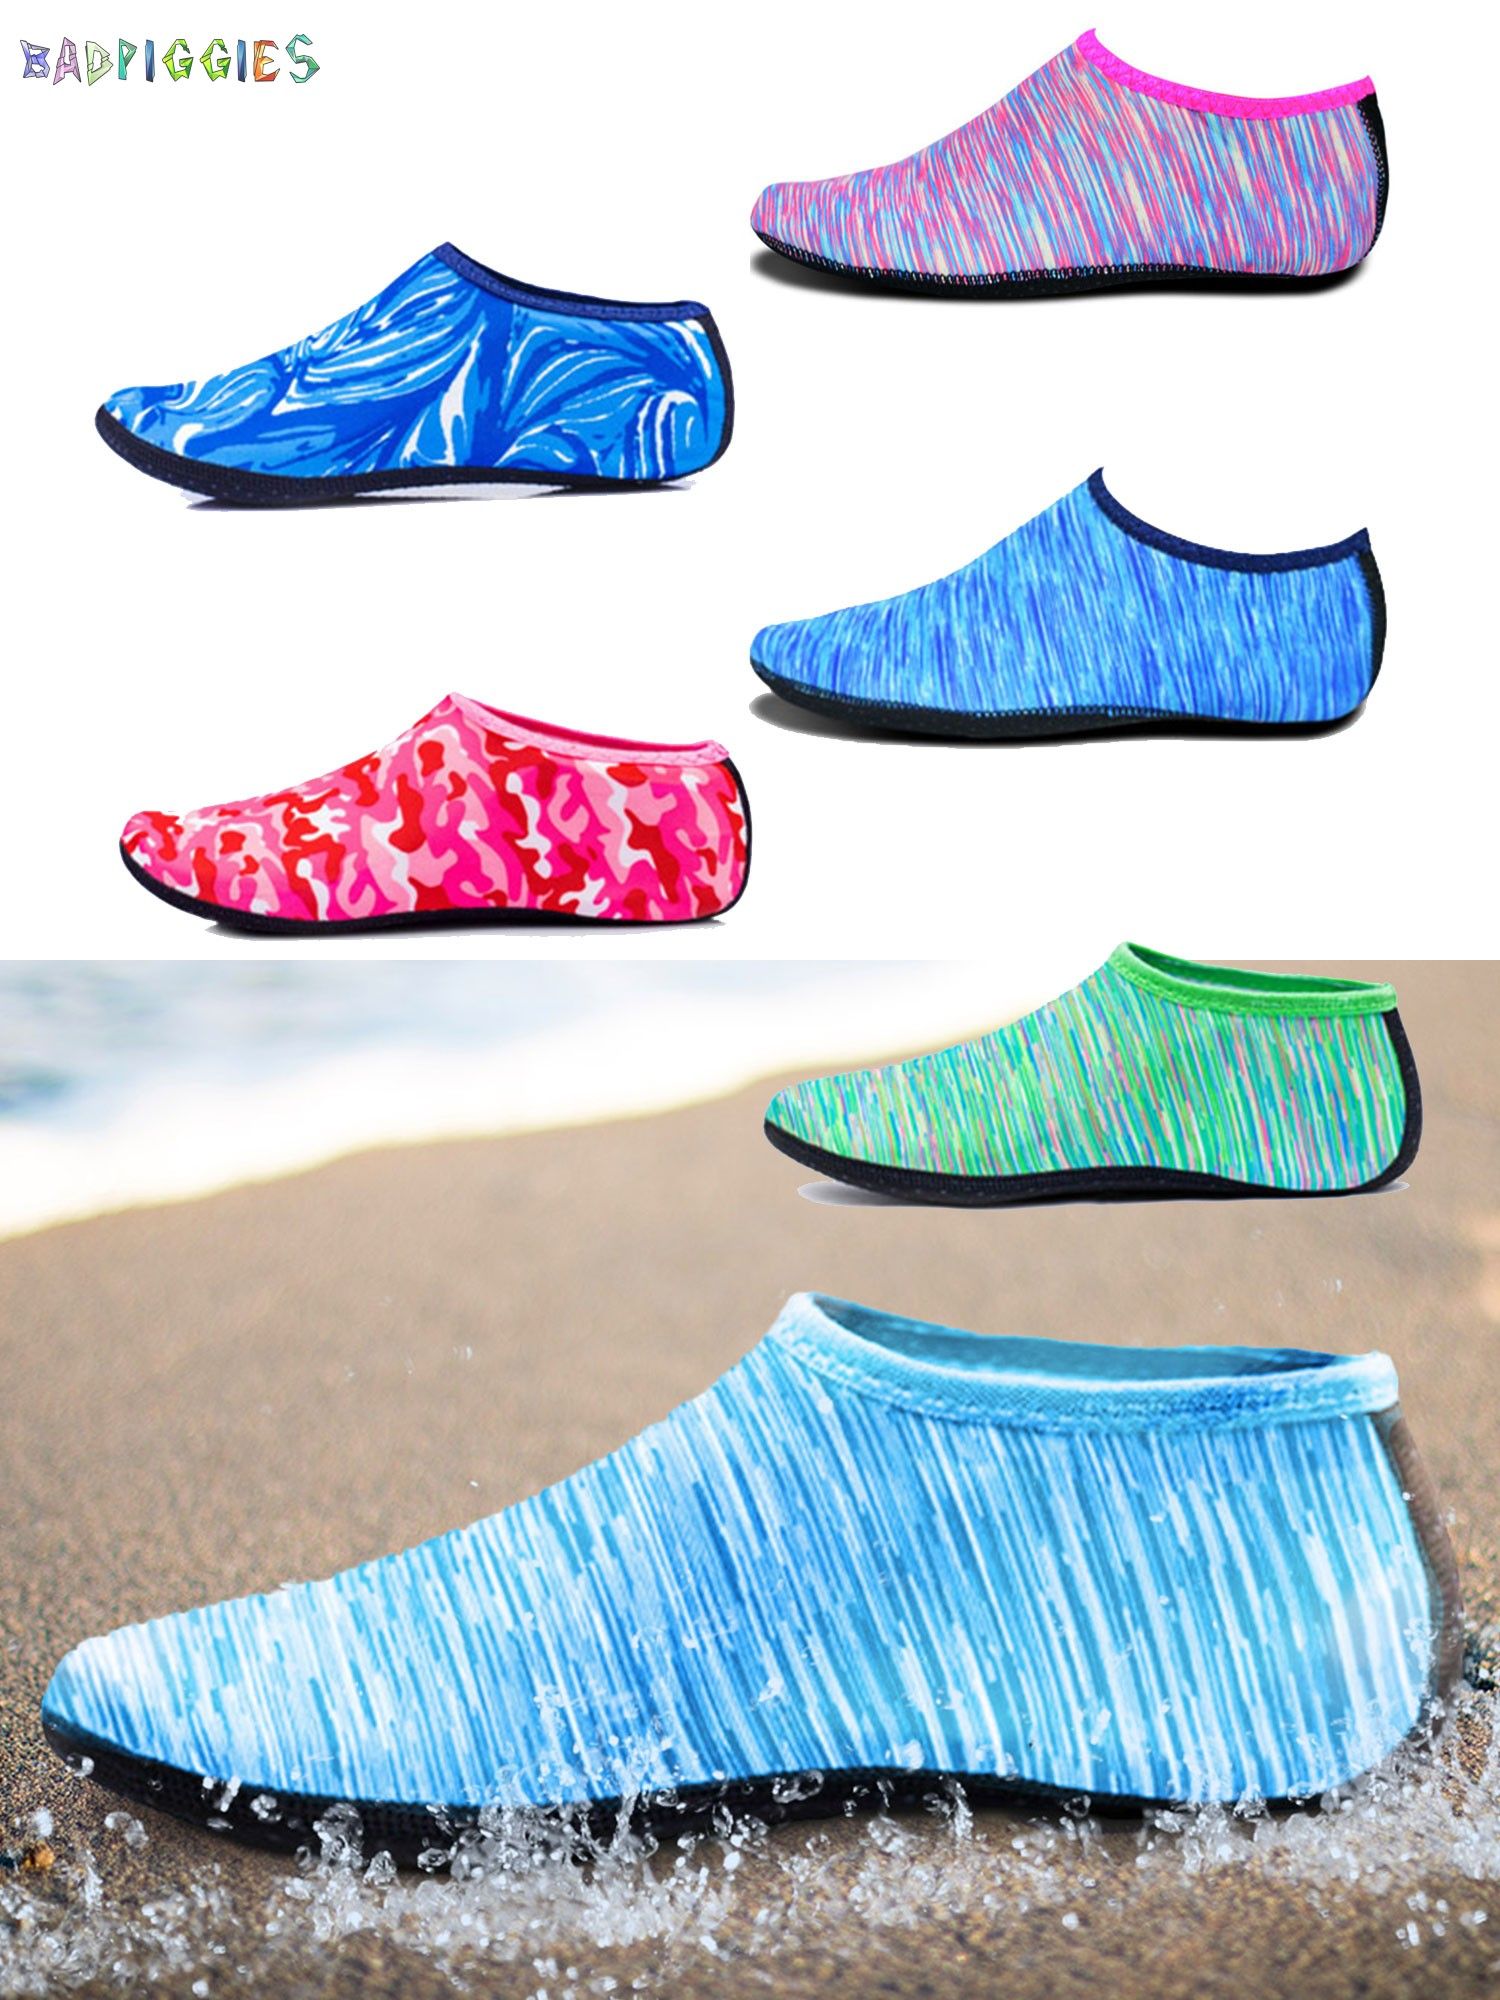 BadPiggies Water Socks Sports Beach Barefoot Quick-Dry Aqua Yoga Shoes Slip-on for Men Women Kids (S, Line Blue) - image 1 of 6